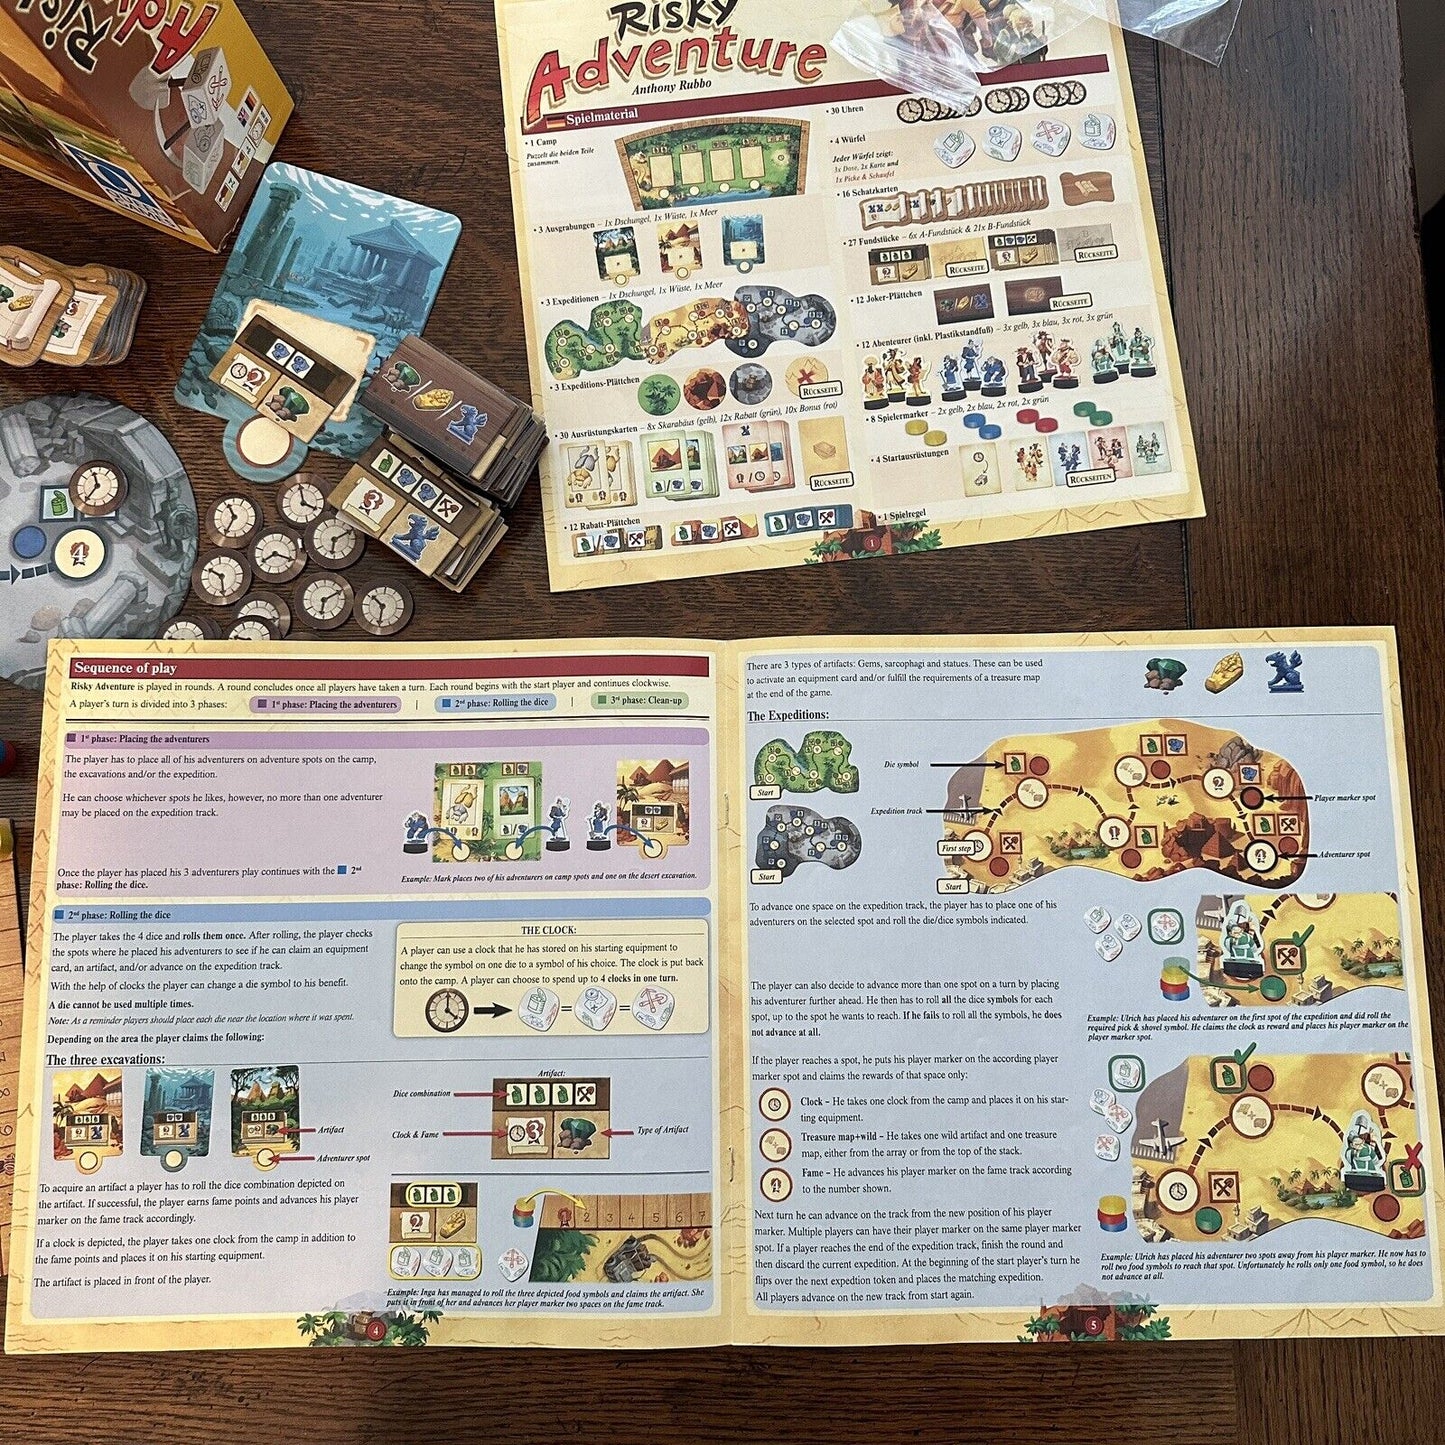 Queen Games Risky Adventure Family Dice Treasure Hunt Dice Board Game Germany